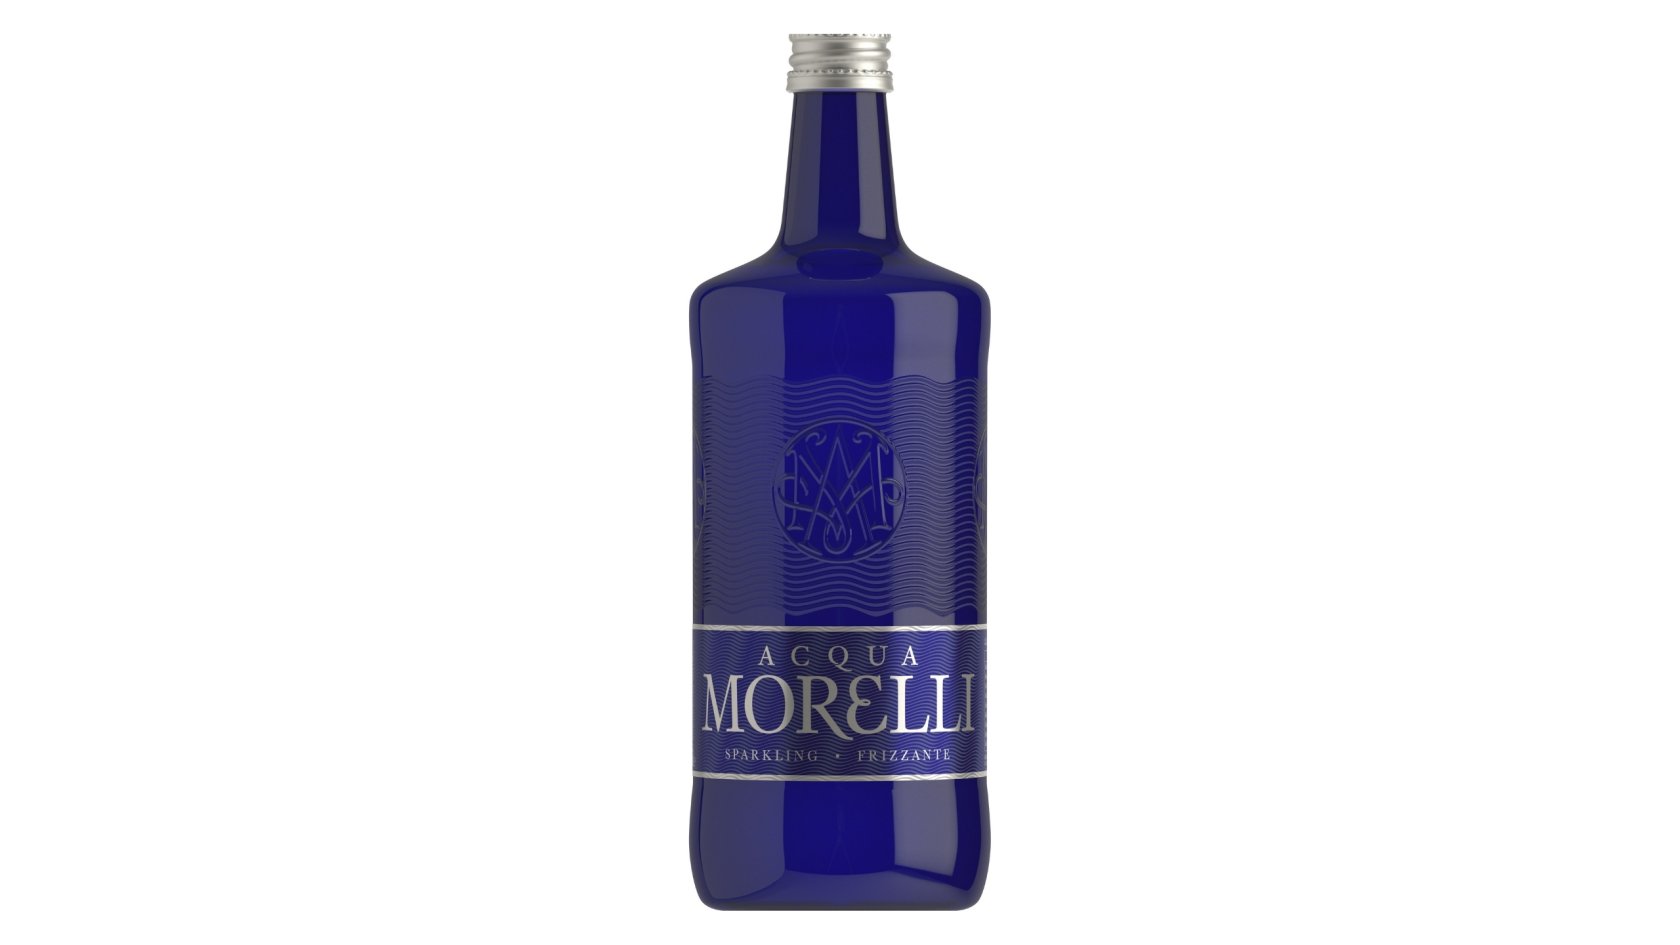 Acqua Morelli sparkling 0,75l (inkl. 0,15€ Pfand)